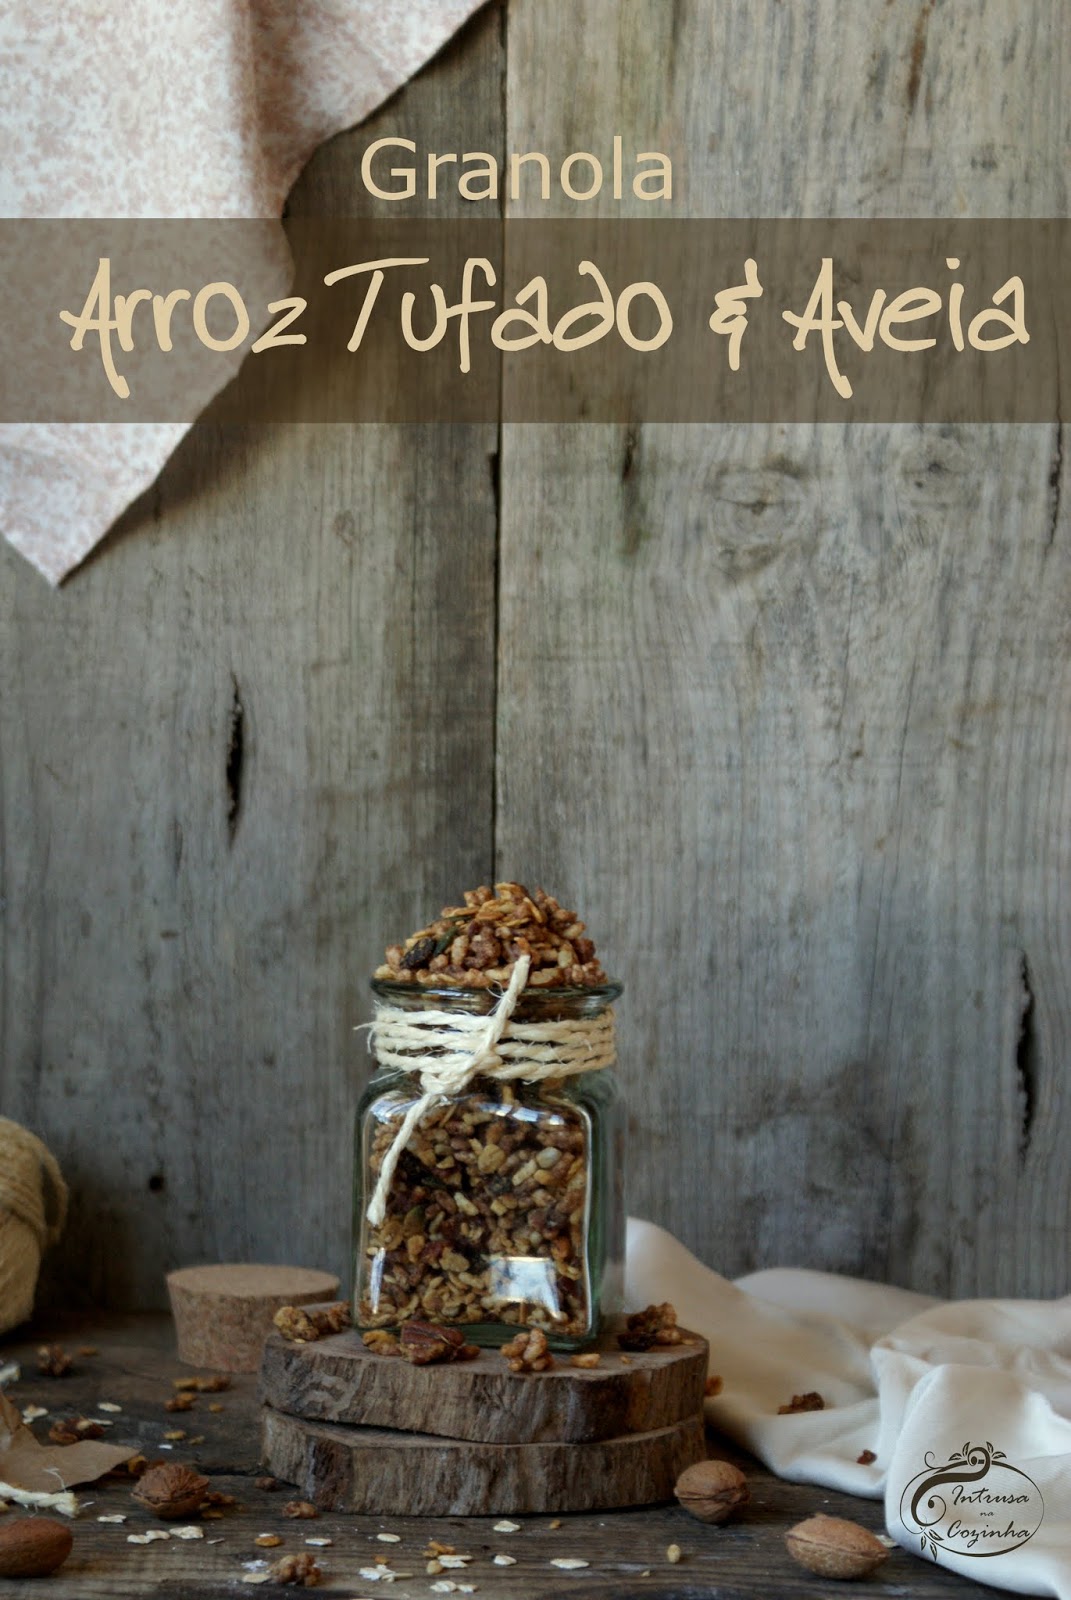 Granola de Arroz Tufado & Aveia